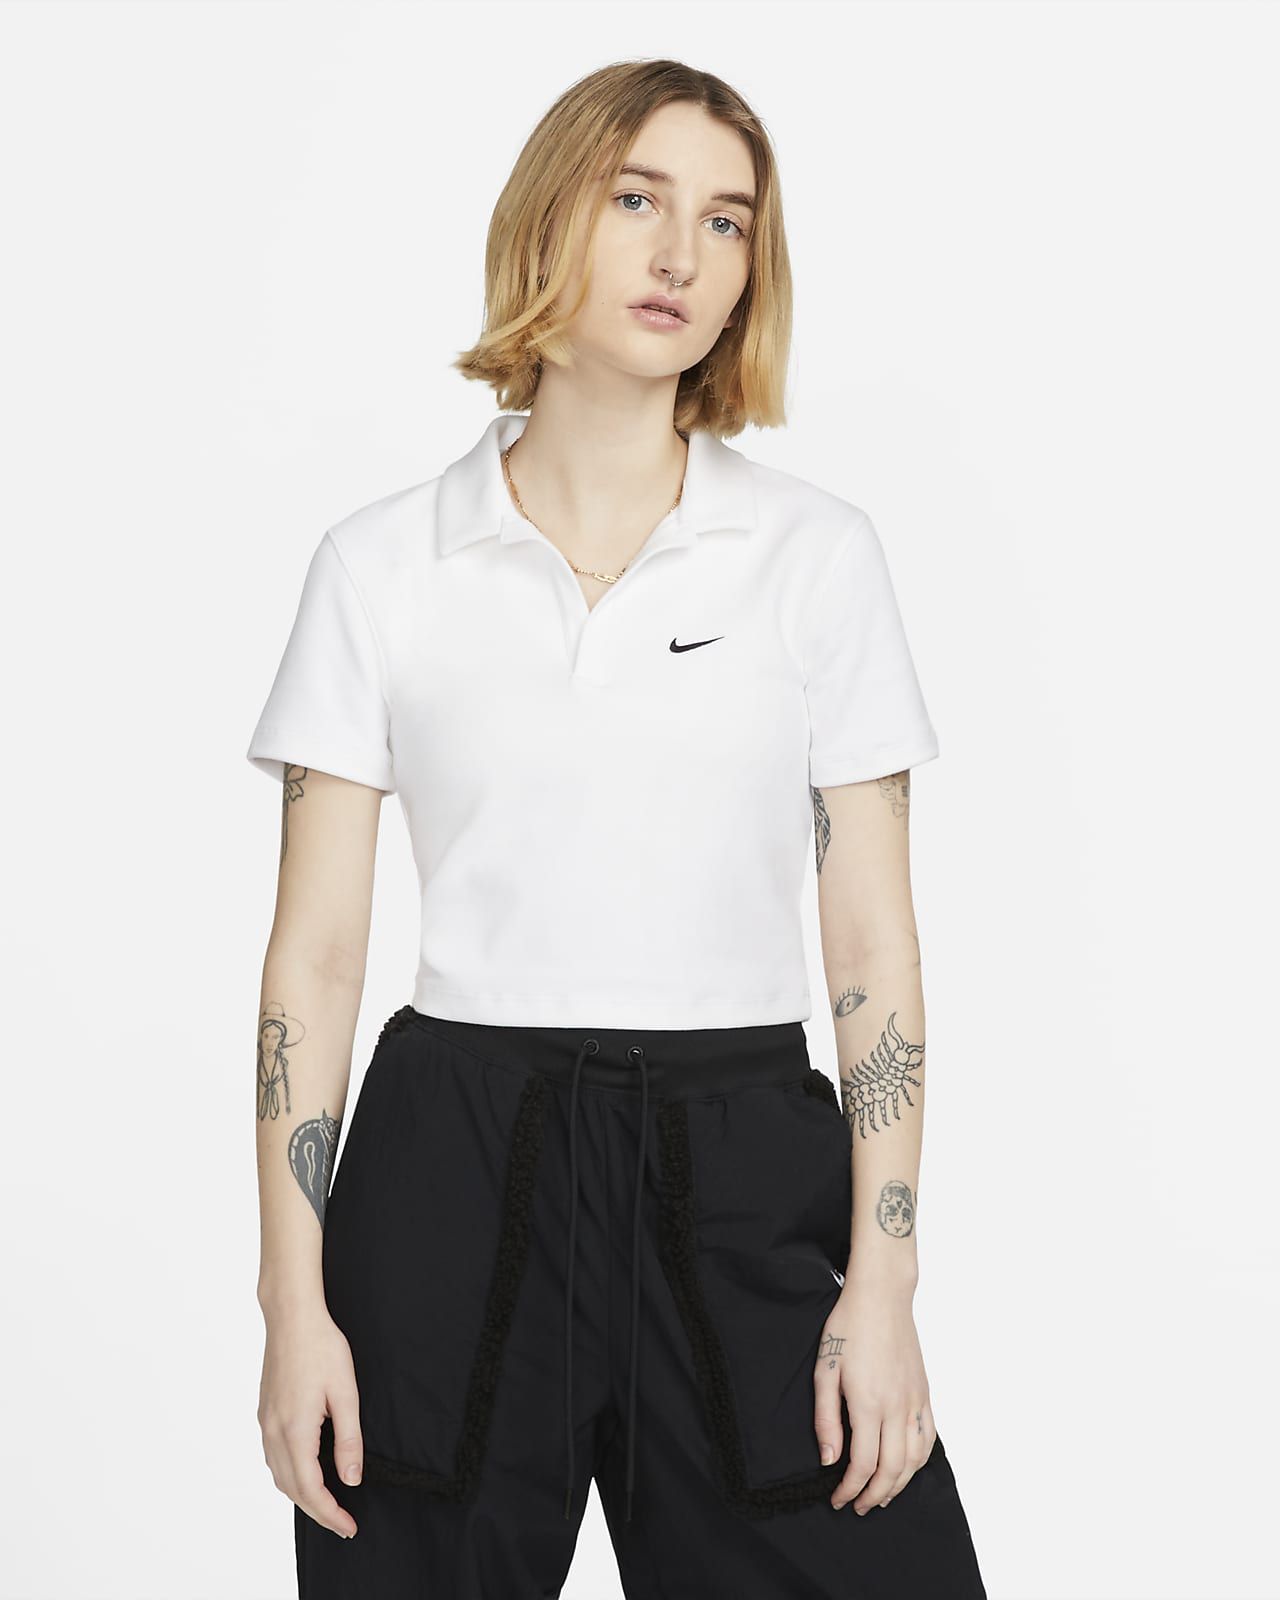 Nike Sportswear Essential Women's Short-Sleeve Polo Top. Nike.com | Nike (US)